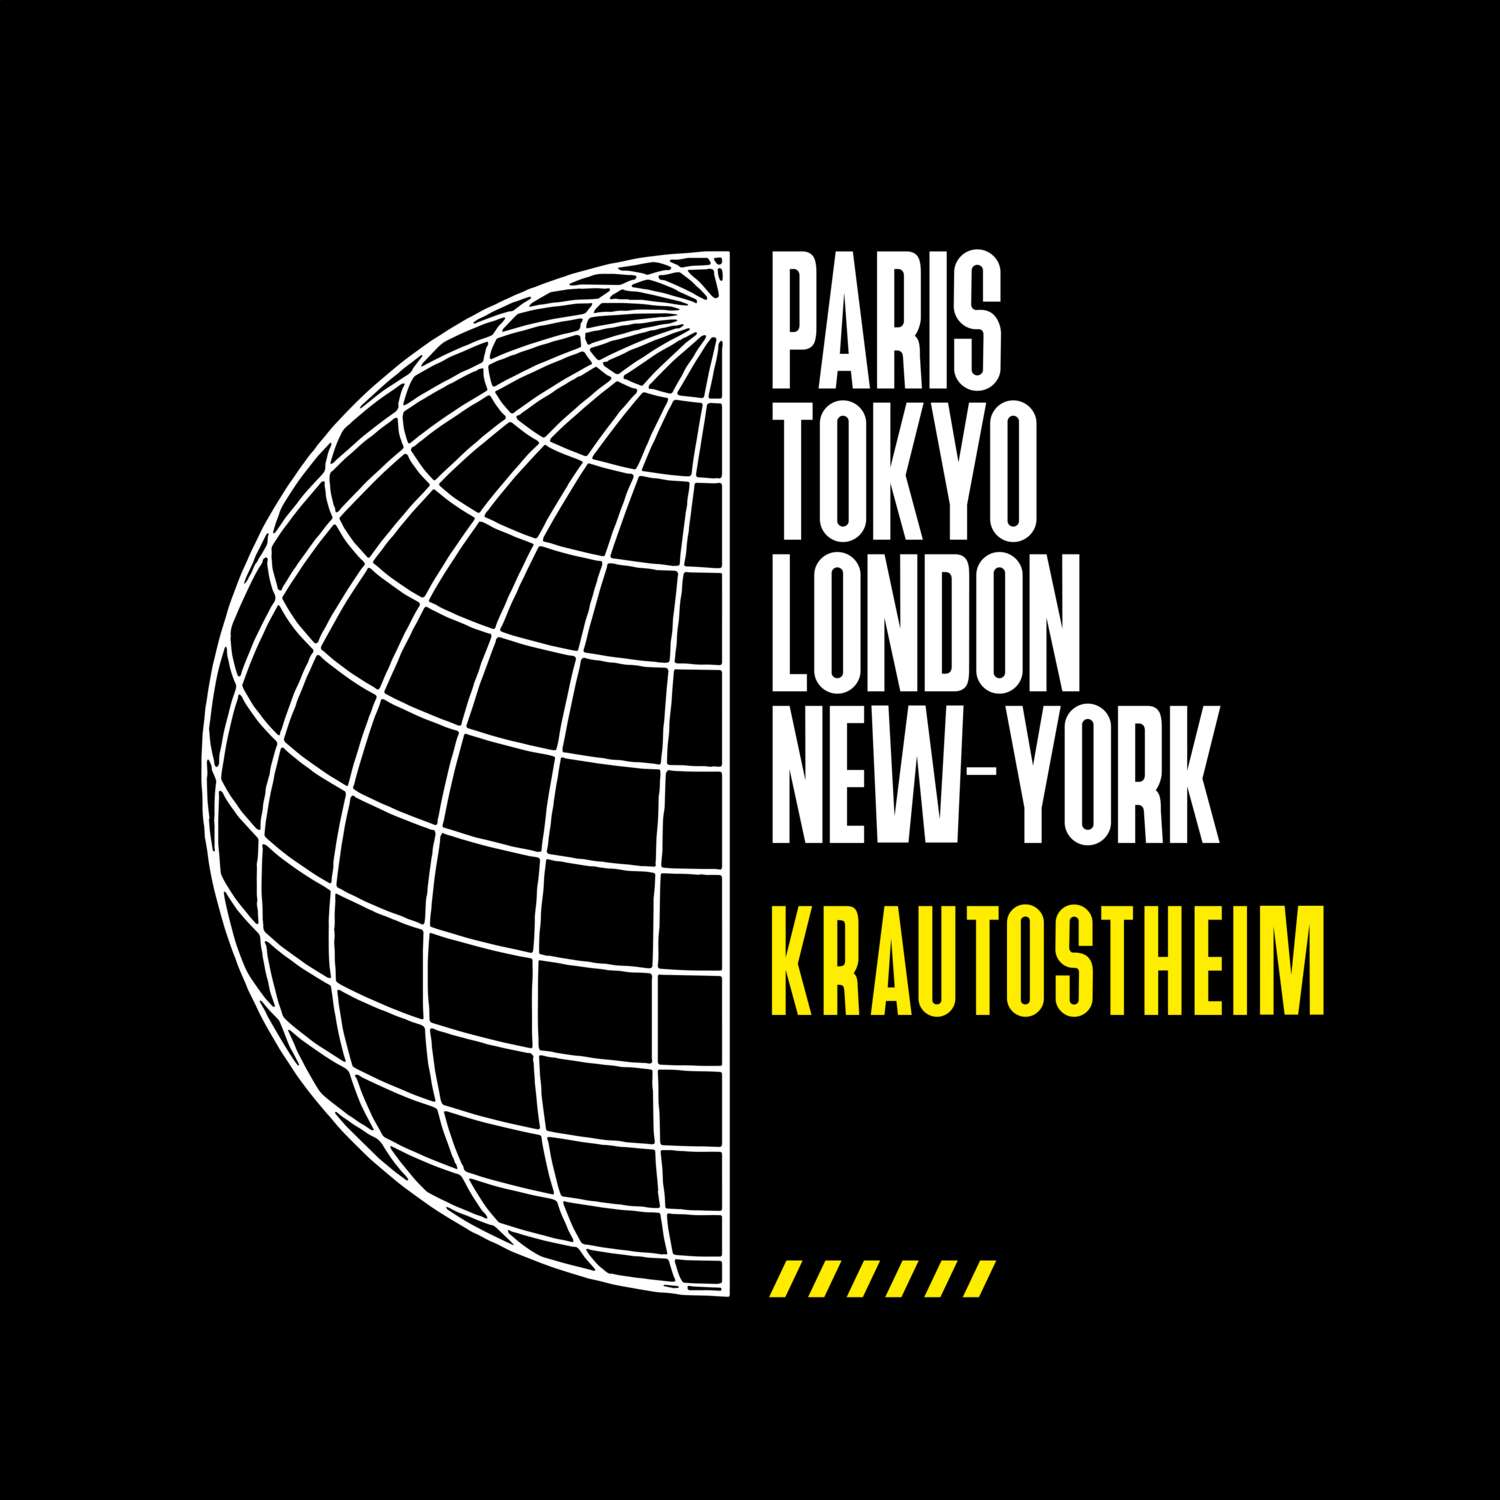 Krautostheim T-Shirt »Paris Tokyo London«